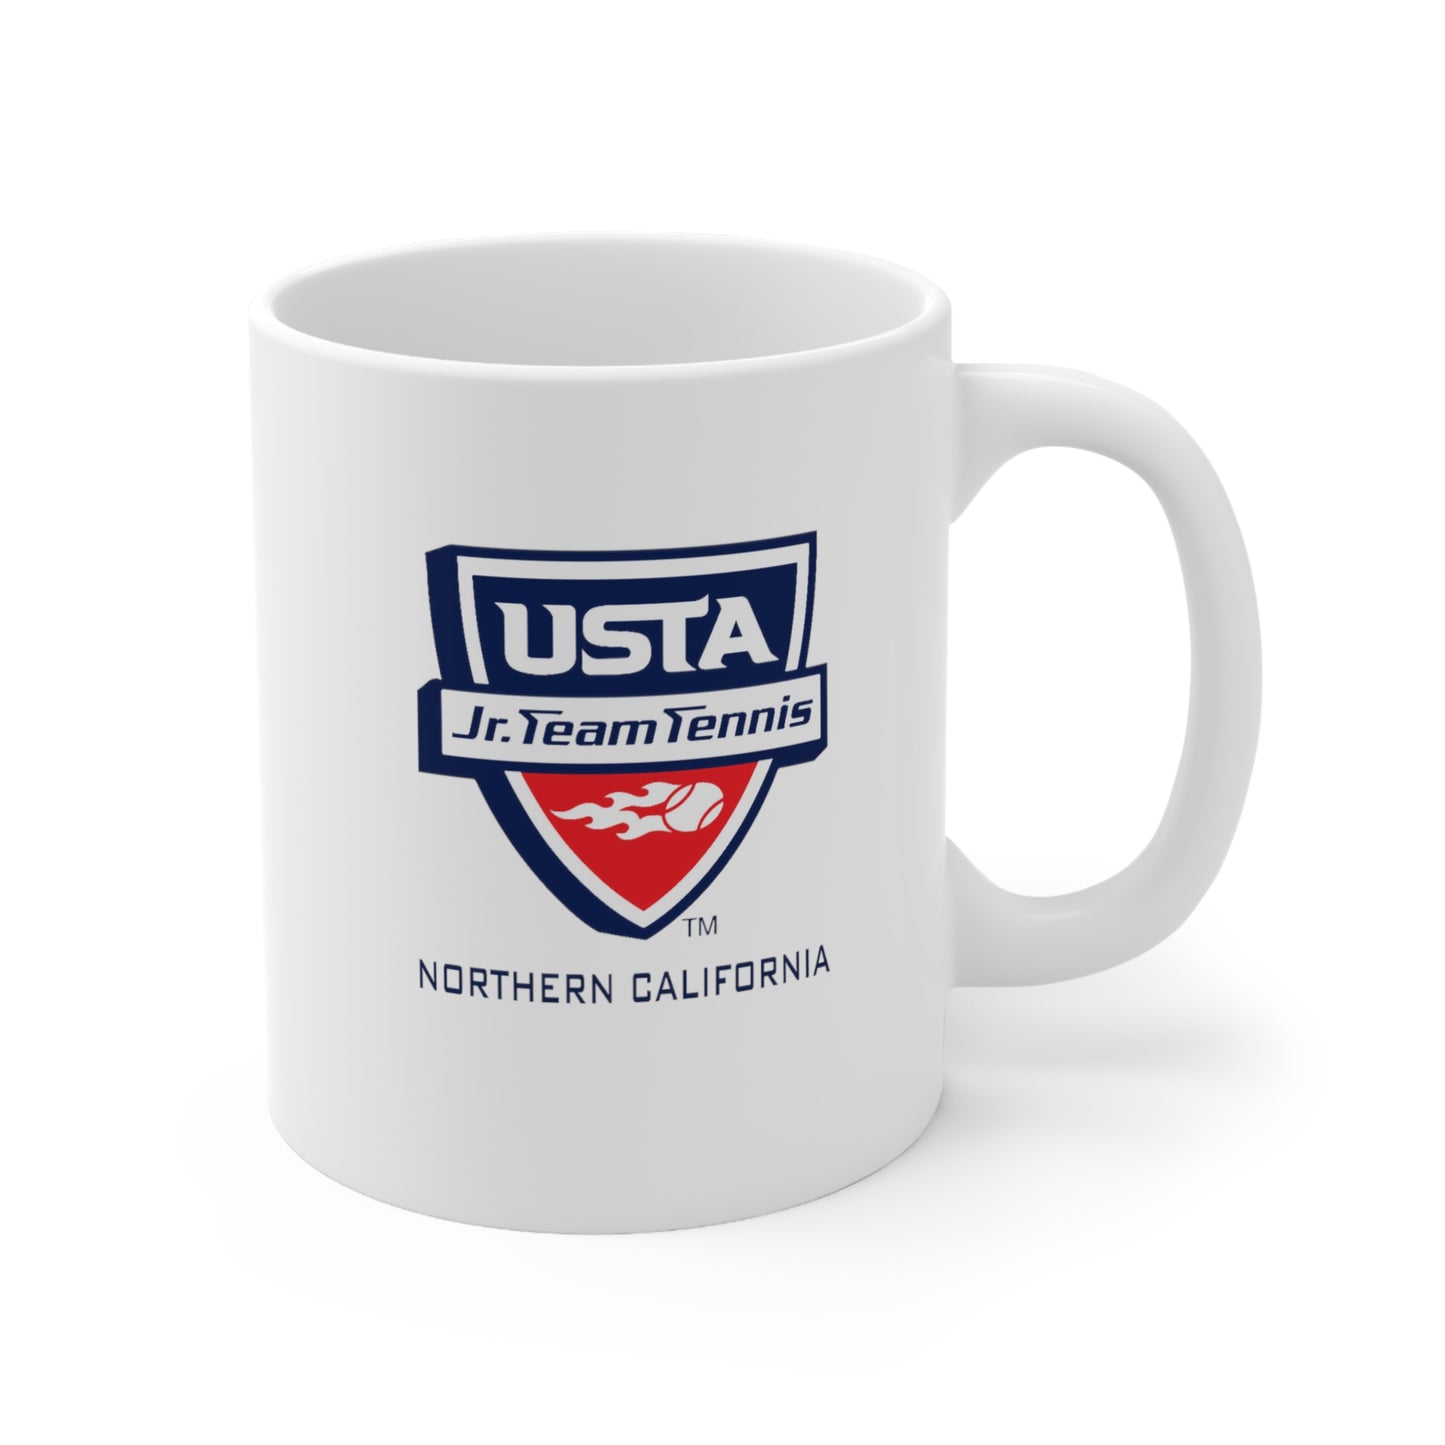 USTA Jr. Team Tennis Northern California Ceramic Mug